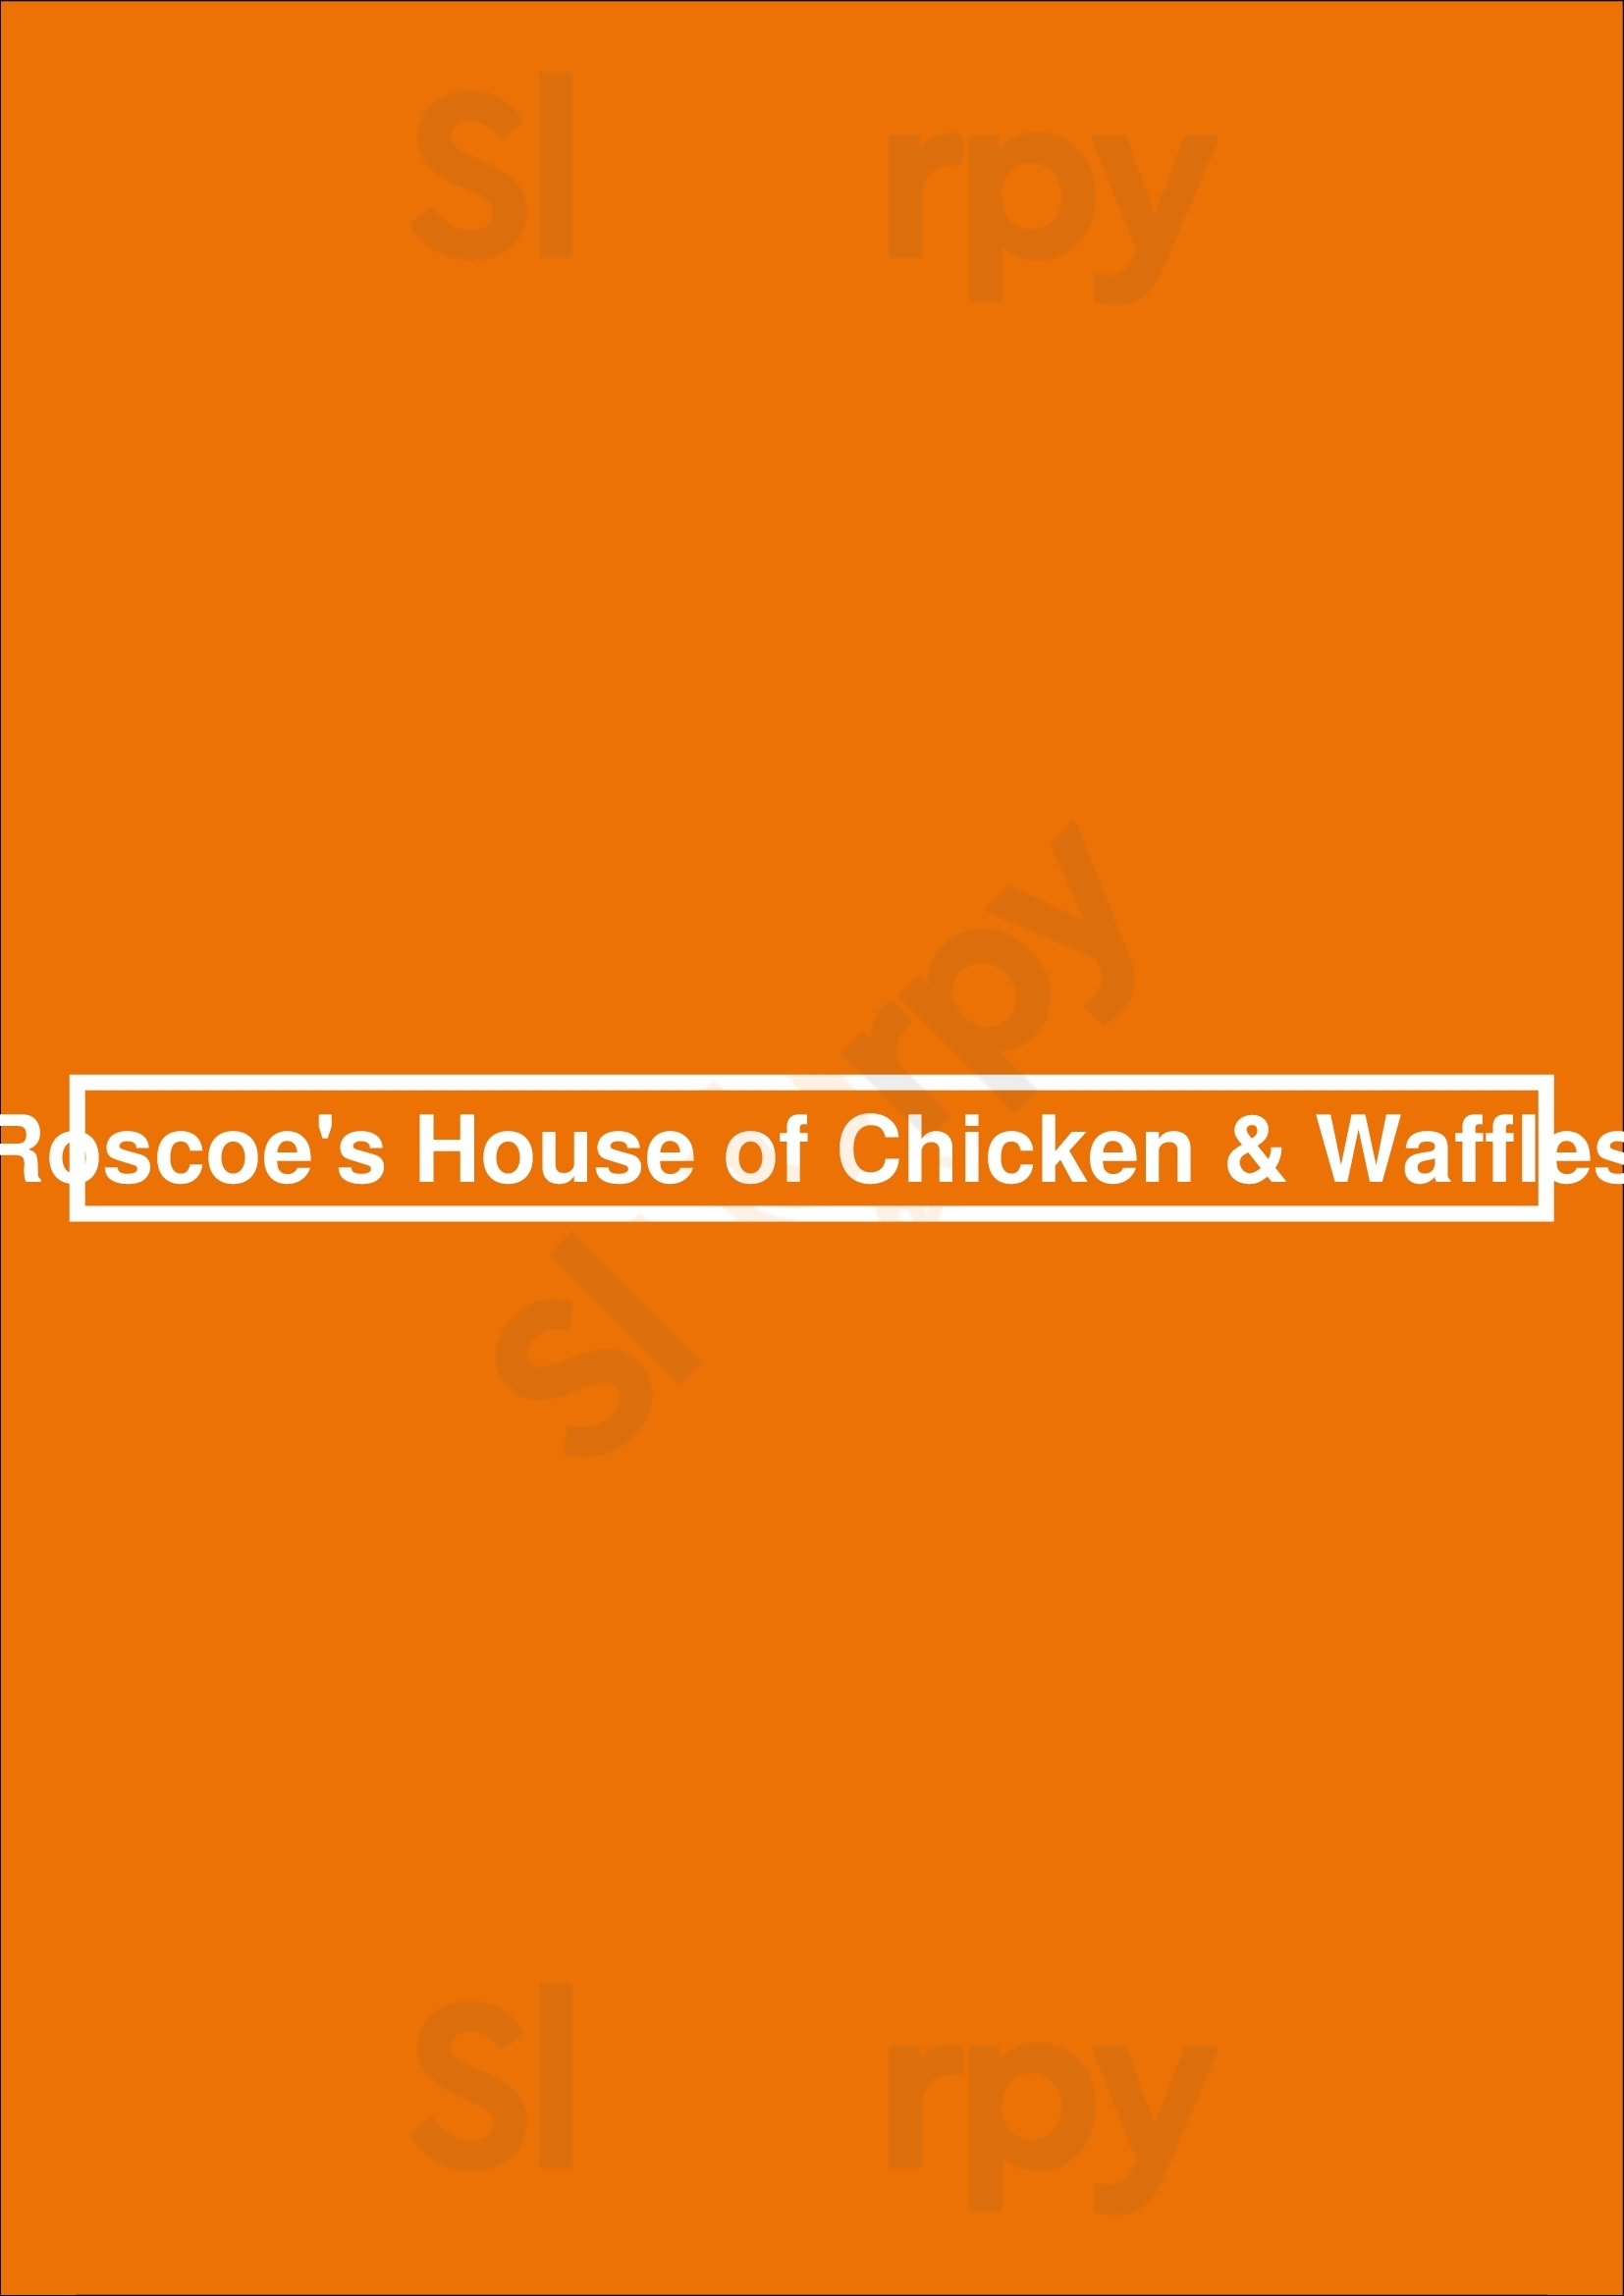 Roscoe's House Of Chicken & Waffles Los Angeles Menu - 1